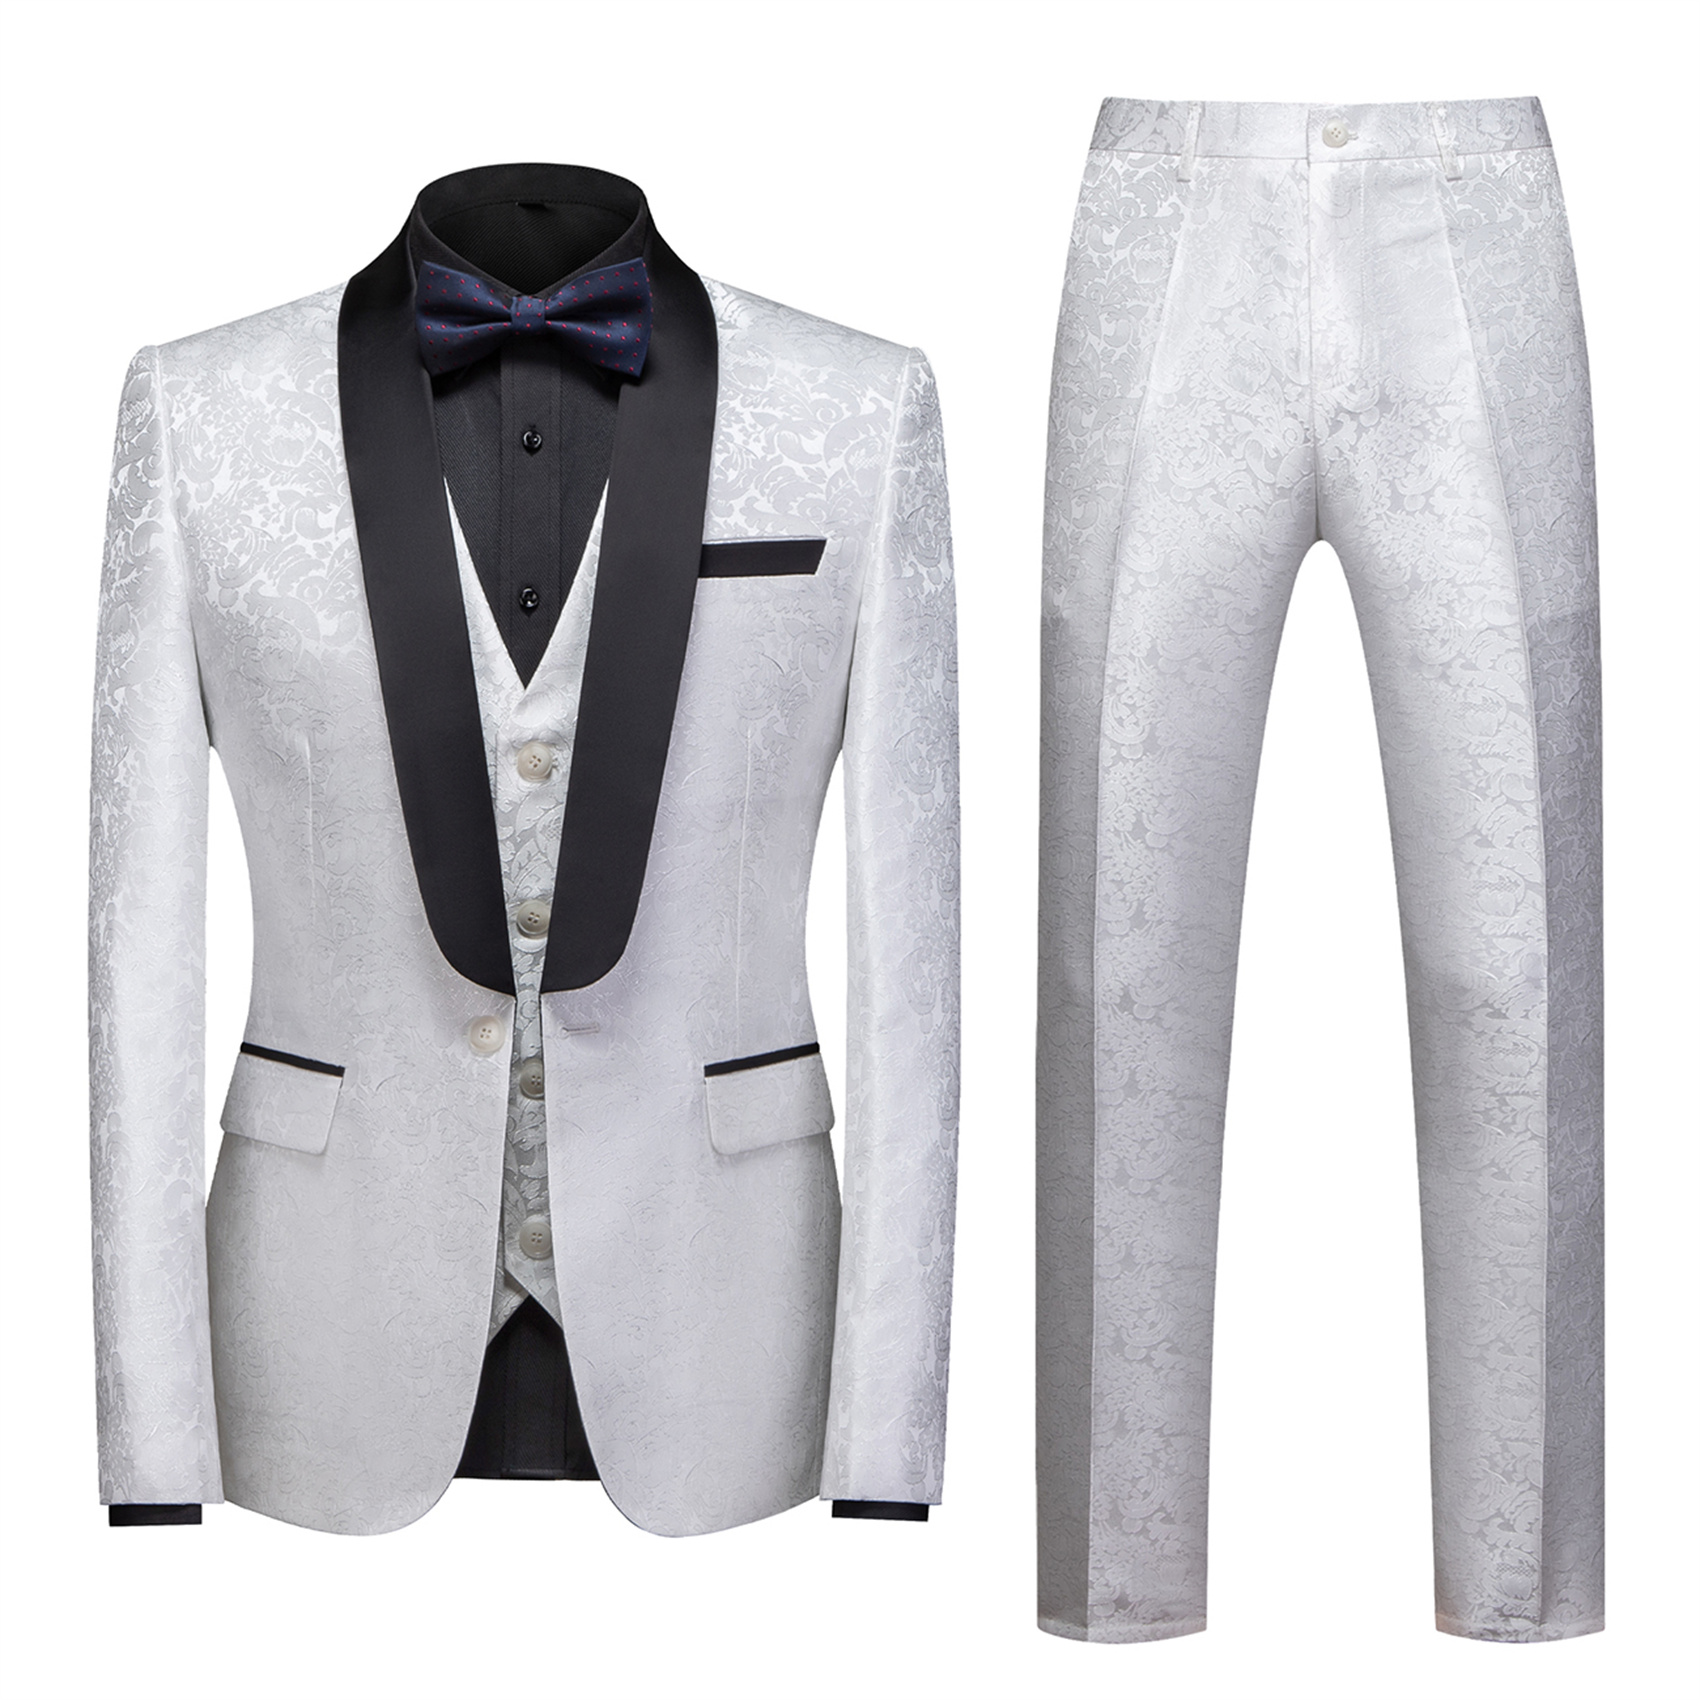 3 Piece Wedding Tuxedos for Men, Printed, Slim Fit, White & Black